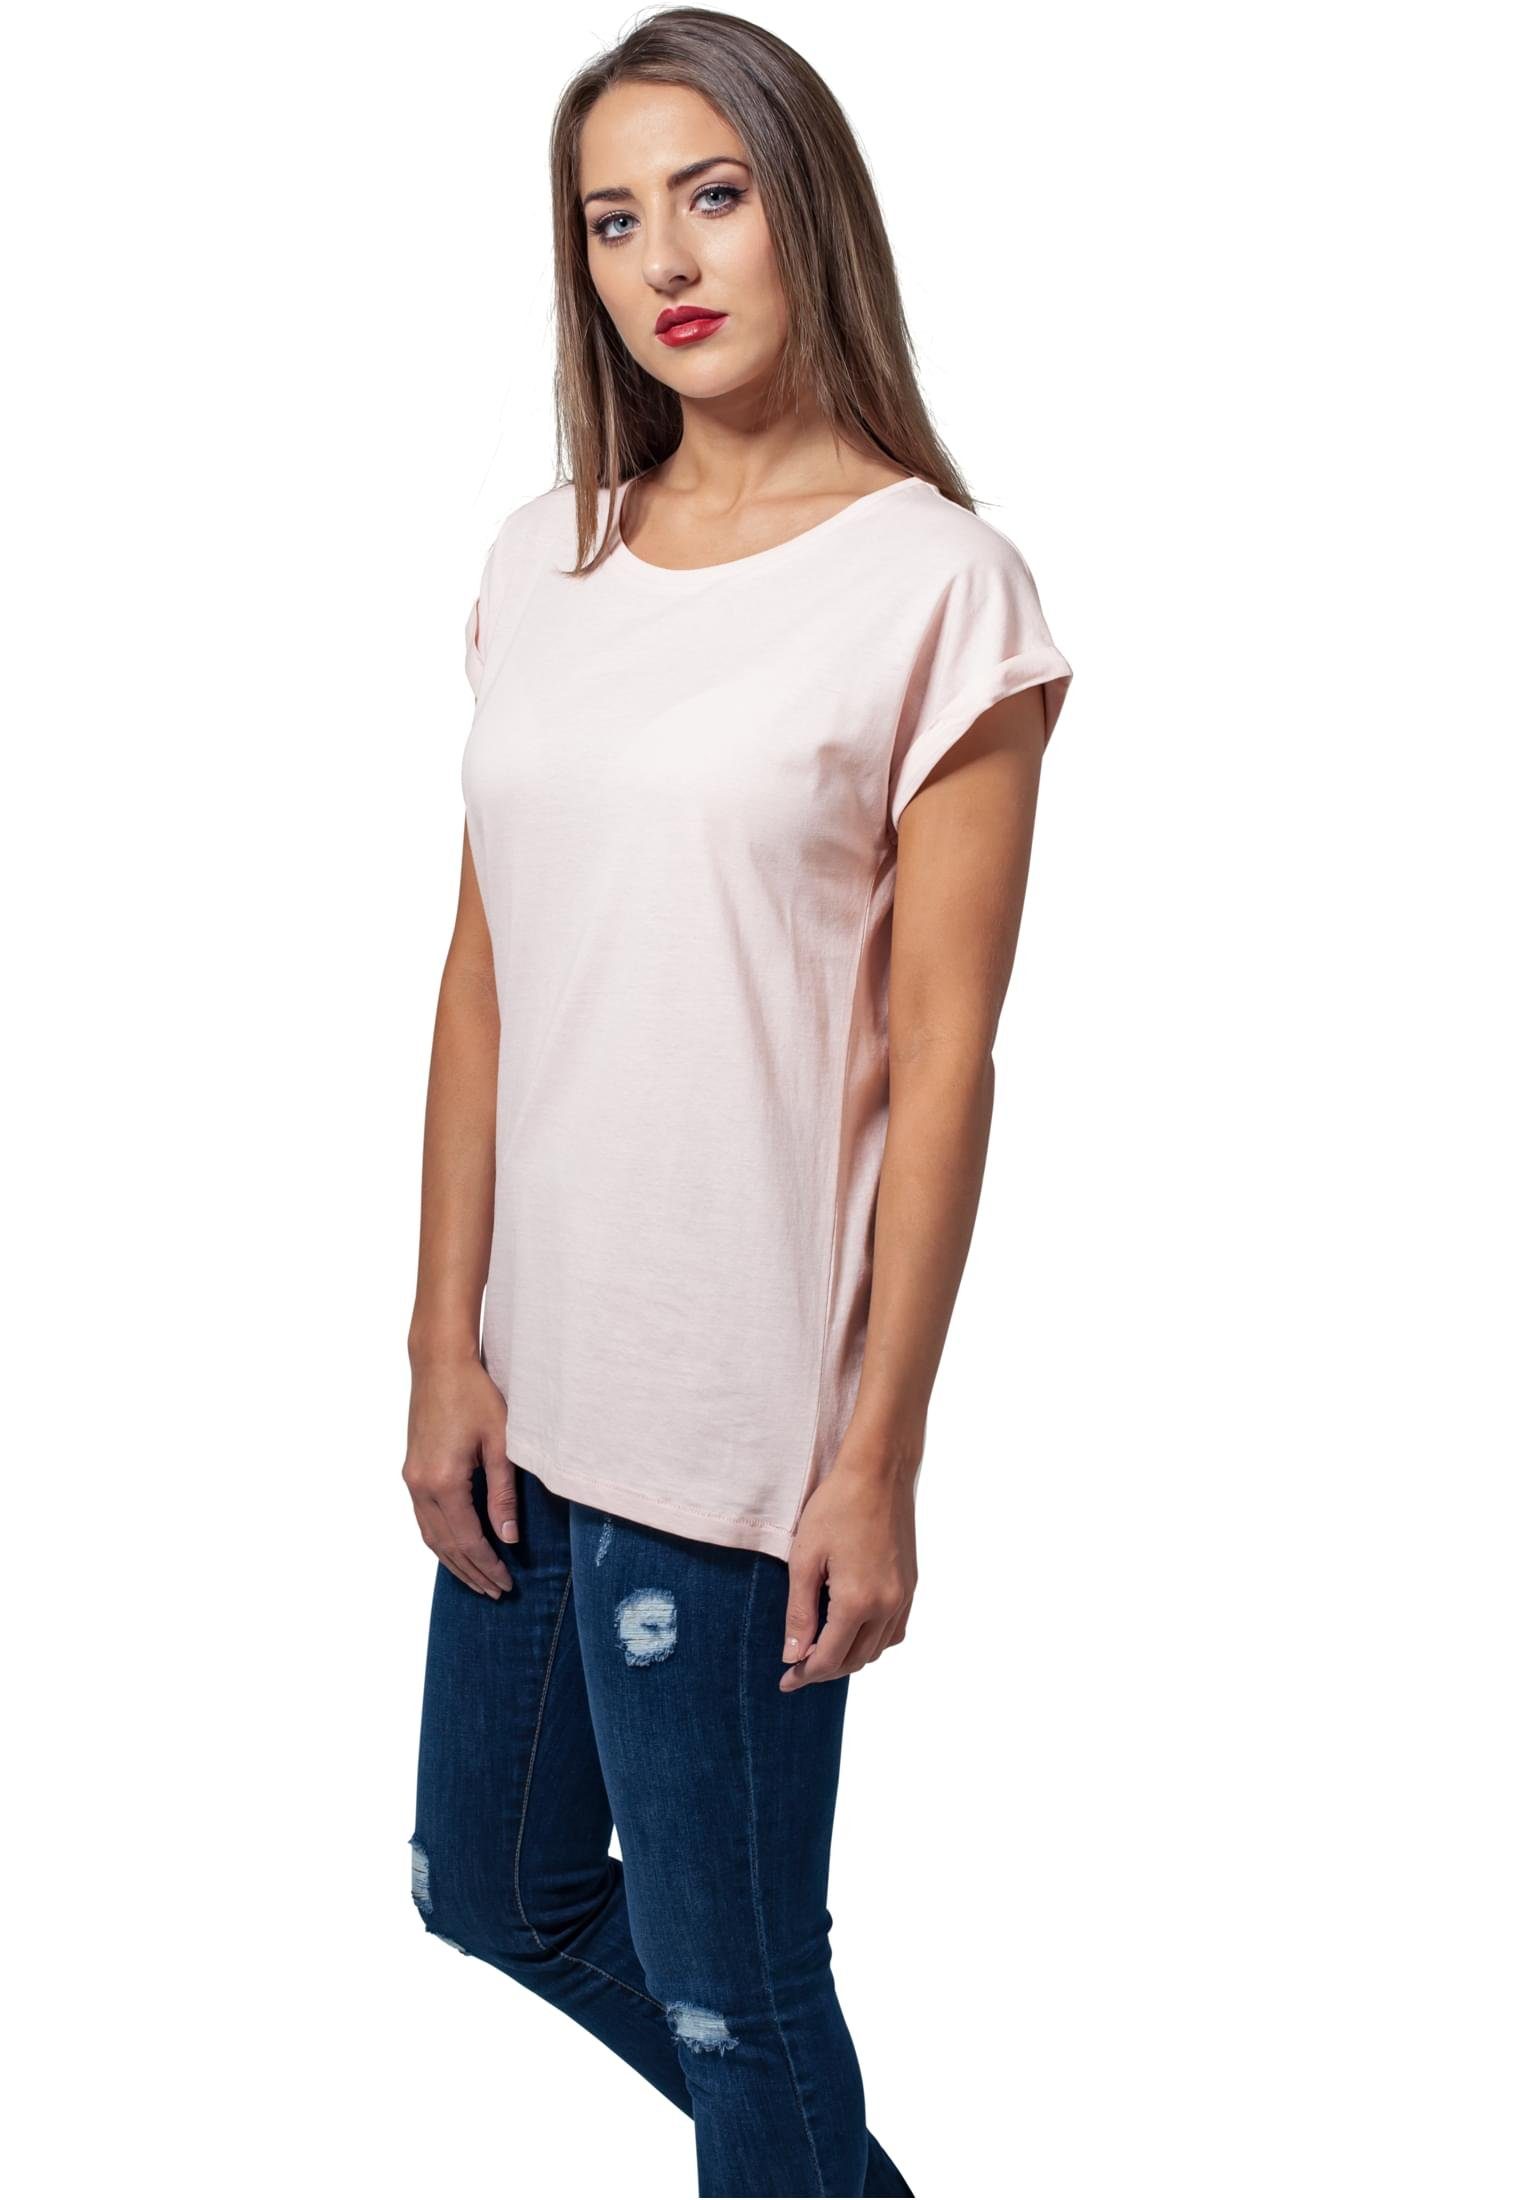 Shoulder CLASSICS URBAN TB771 T-Shirt Extended pink